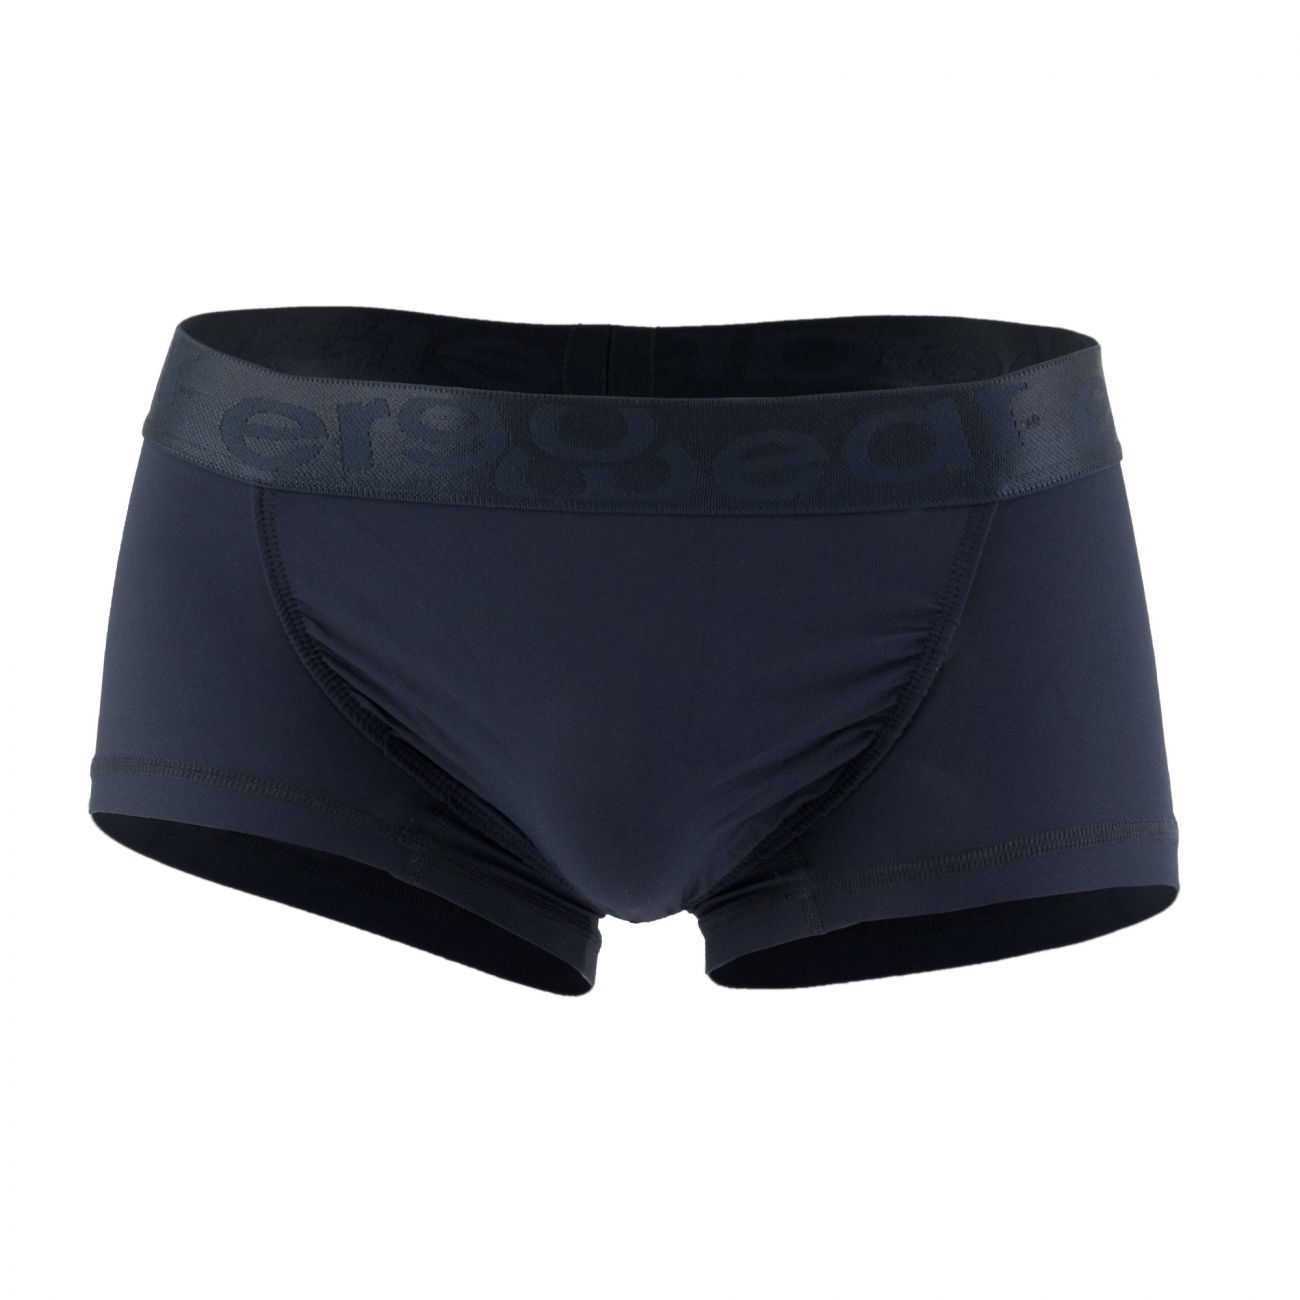 Mens Underwear: ErgoWear EW0628 FEEL XV Boxer Briefs | eBay